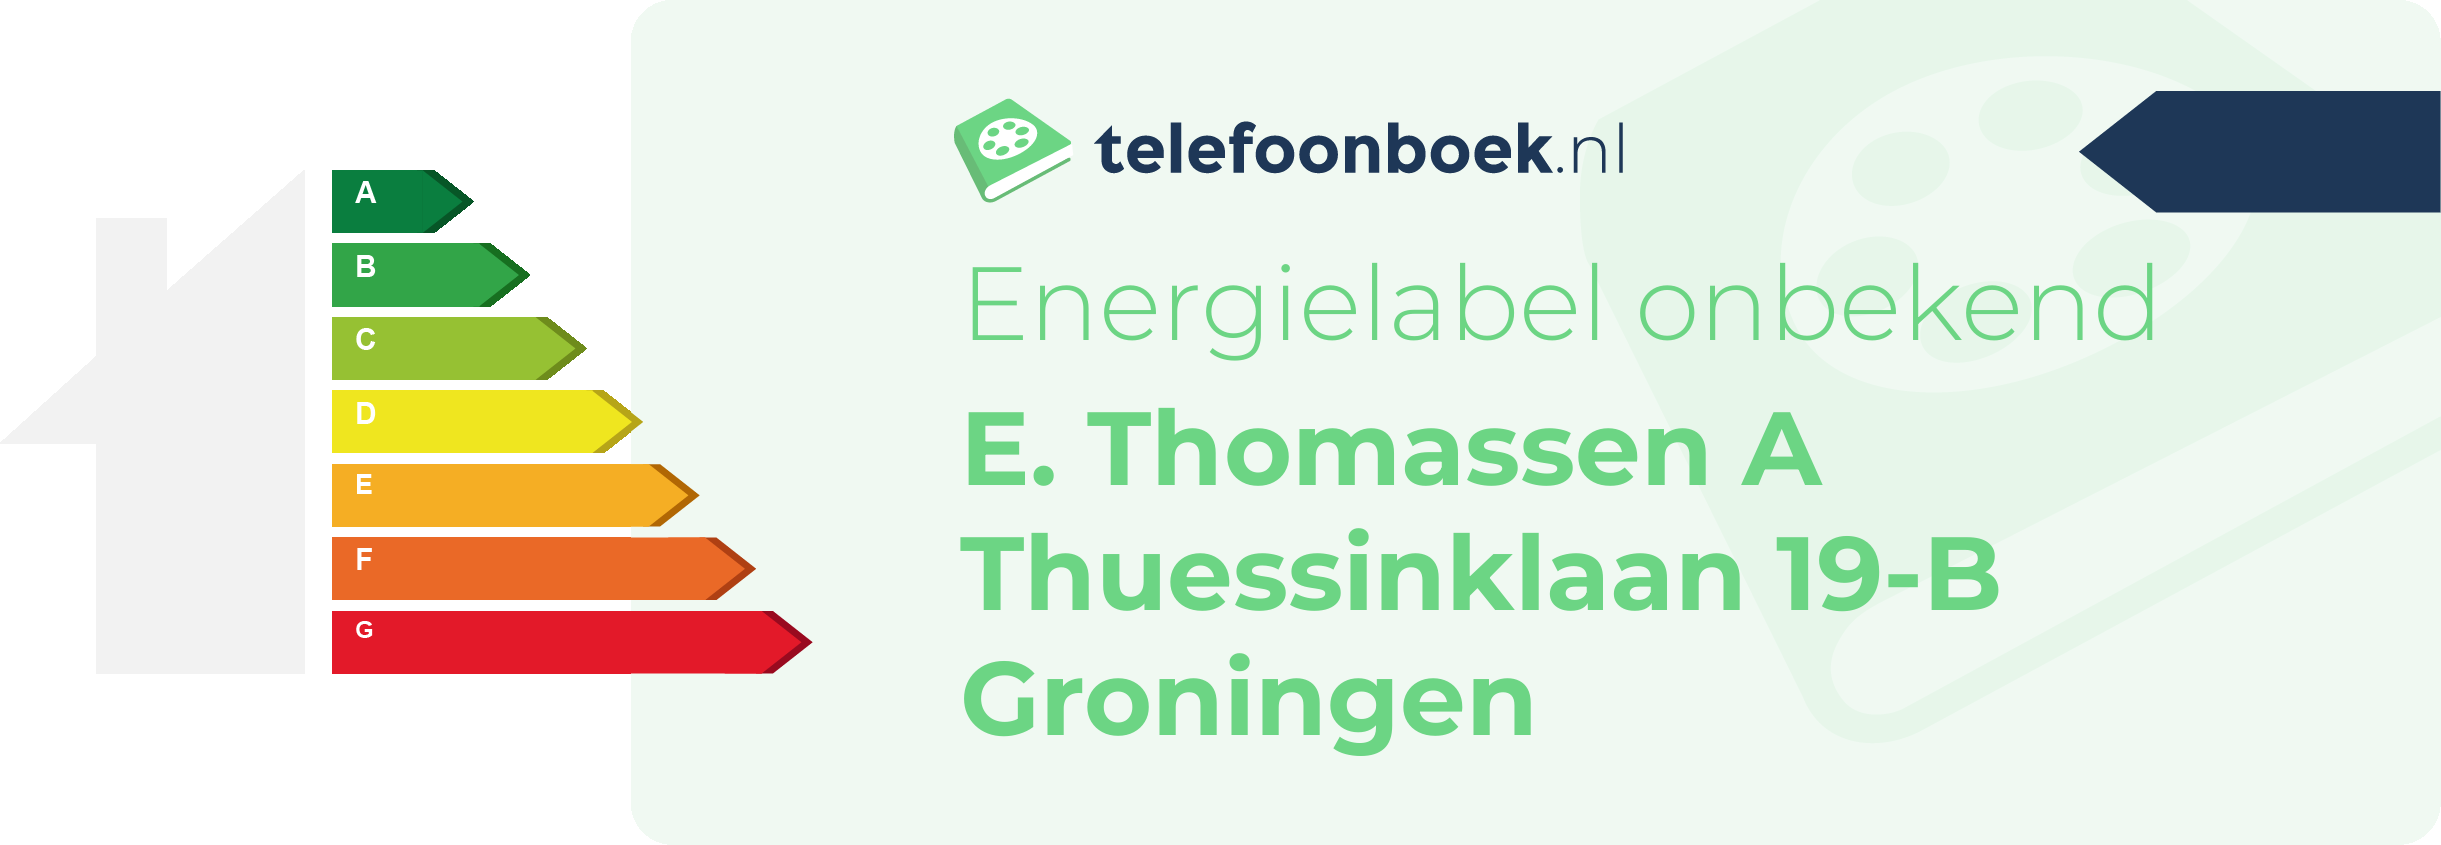 Energielabel E. Thomassen A Thuessinklaan 19-B Groningen